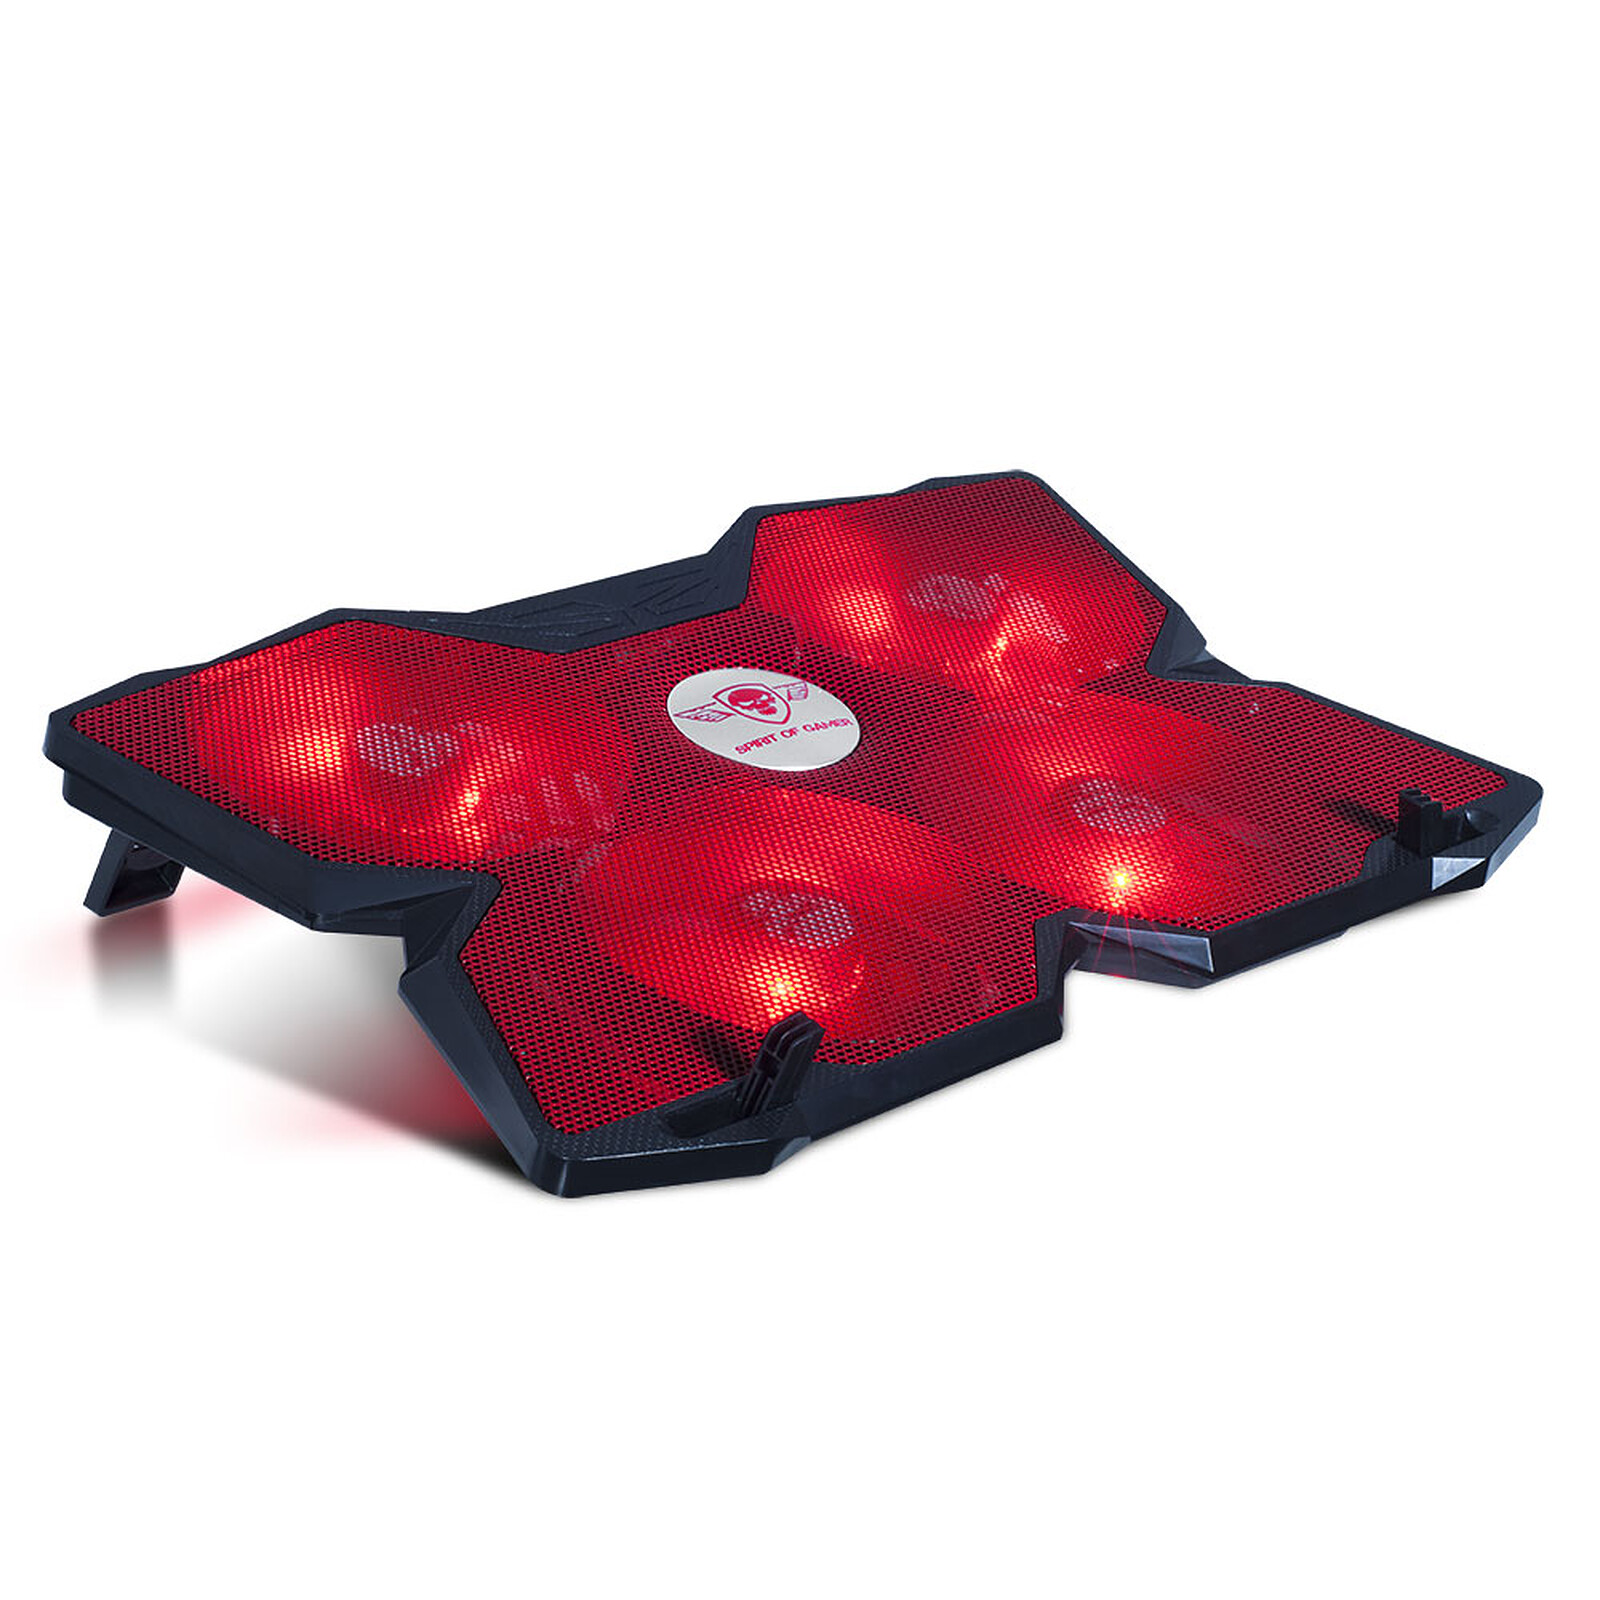 Spirit of Gamer Airblade 500 (Rouge) - Ventilateur PC portable